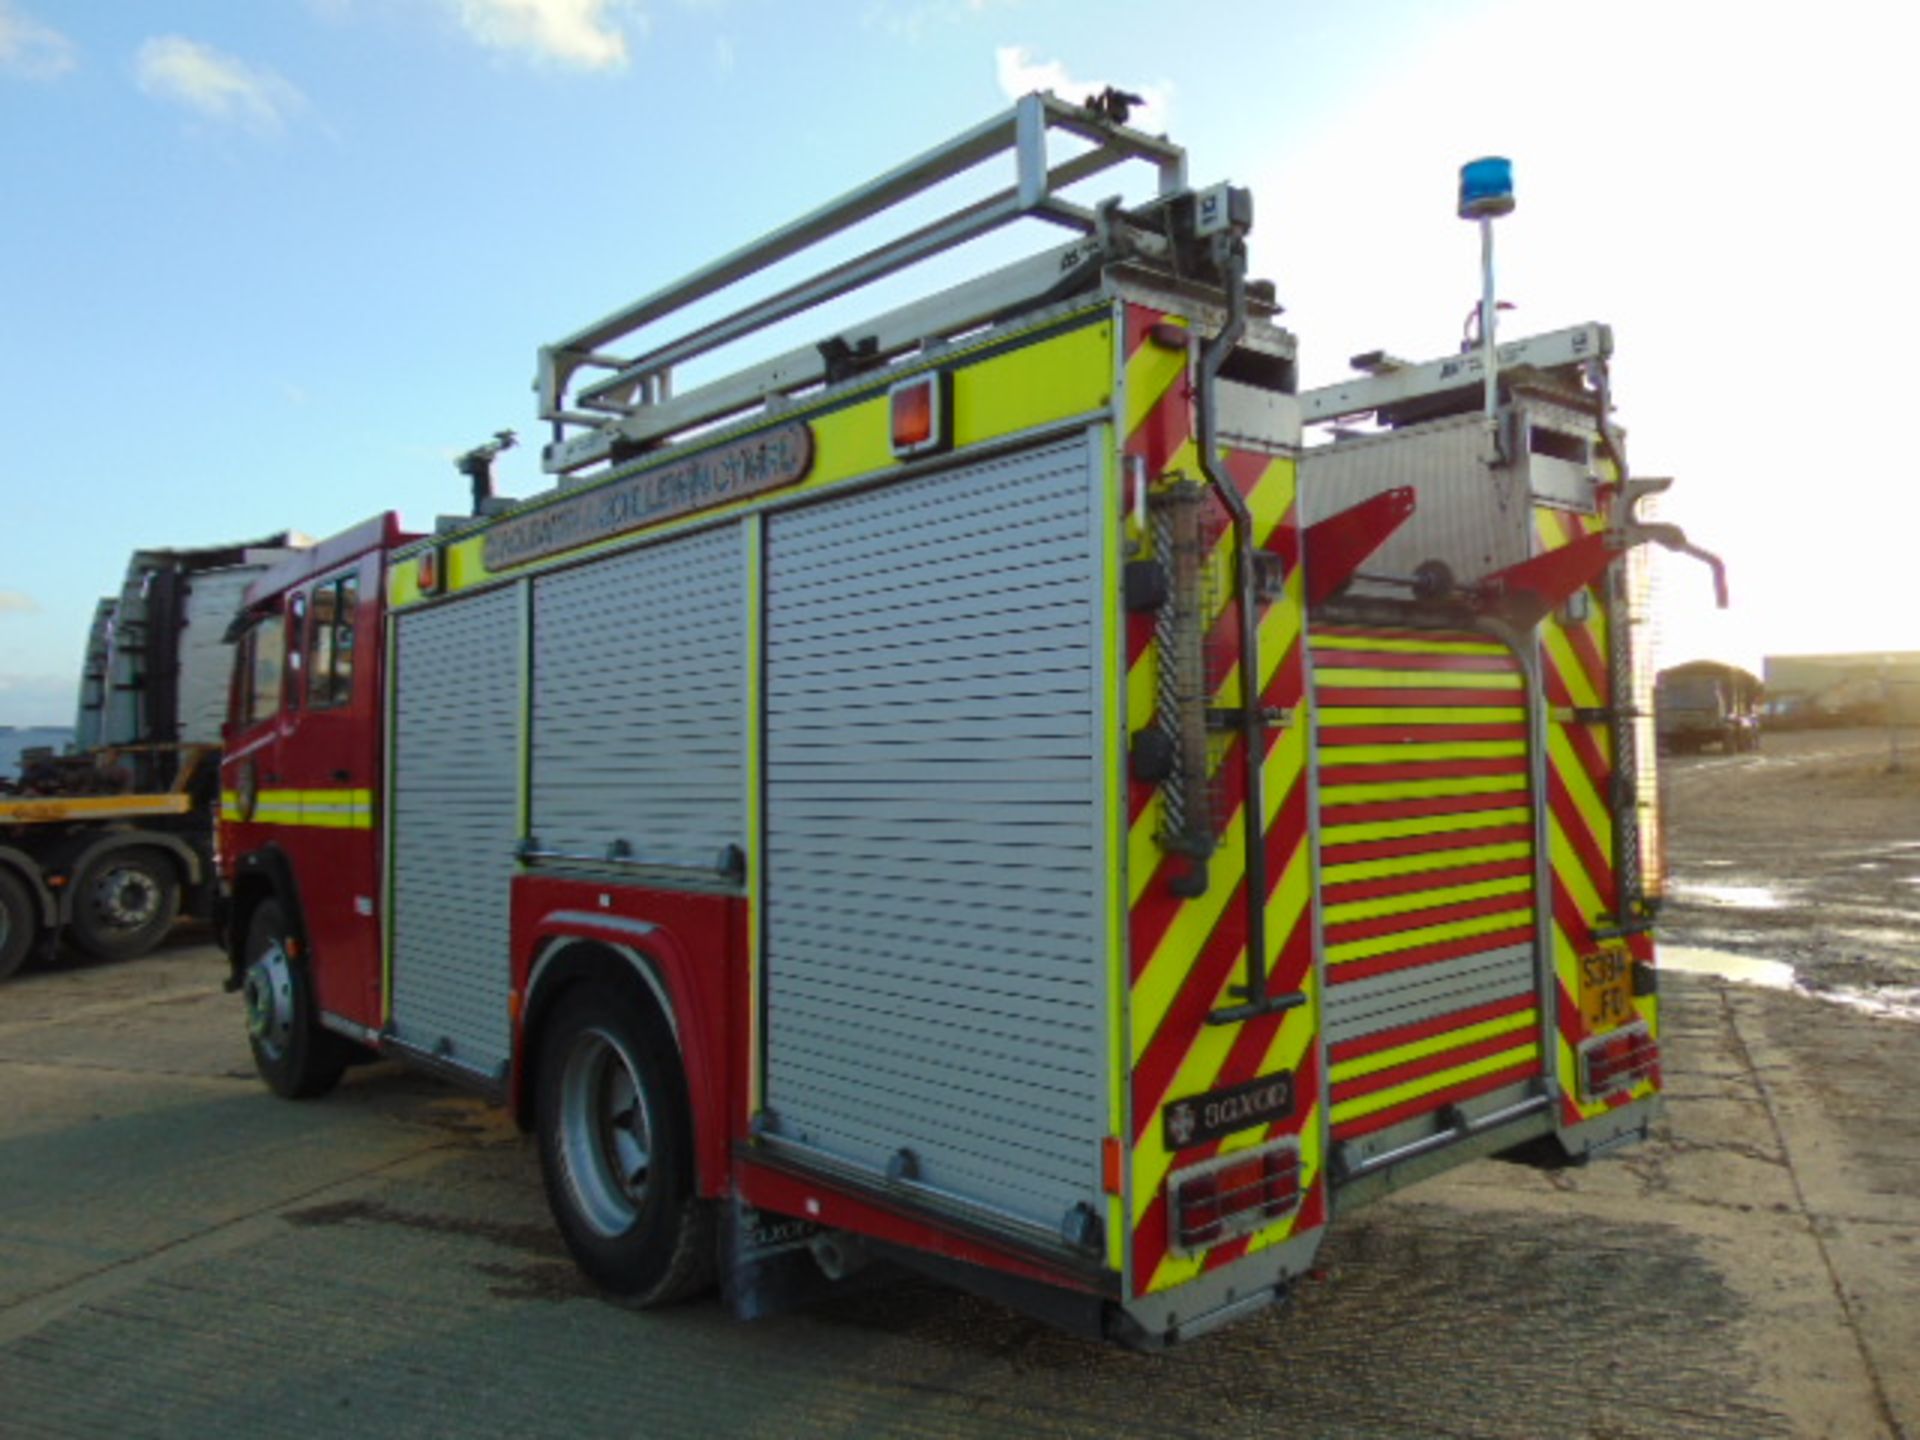 Mercedes 1124 Saxon Fire Engine - Image 8 of 16